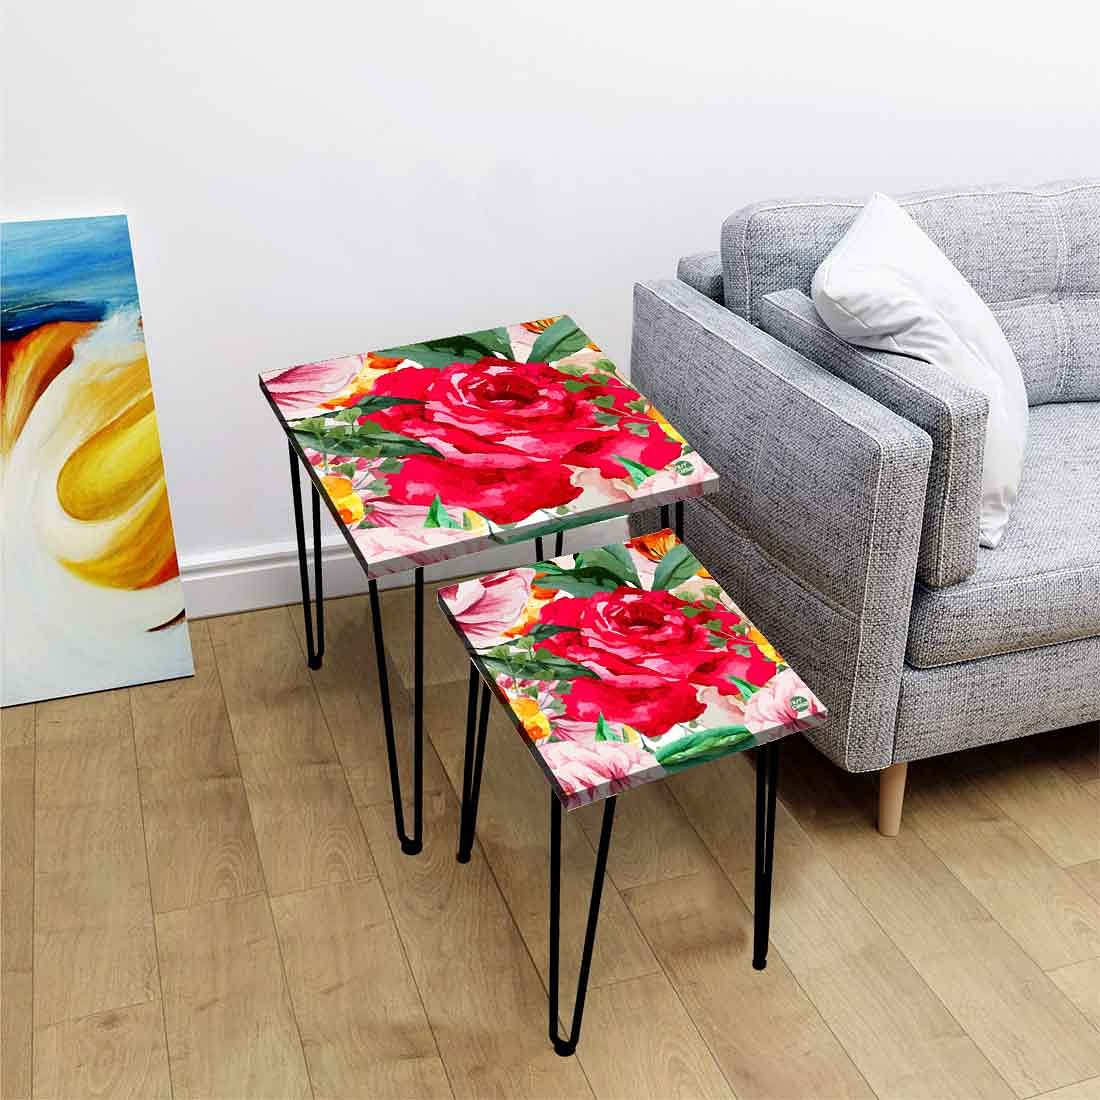 Modern Nest of 2 Coffee Tables for Living Room Bedroom - Rose Nutcase